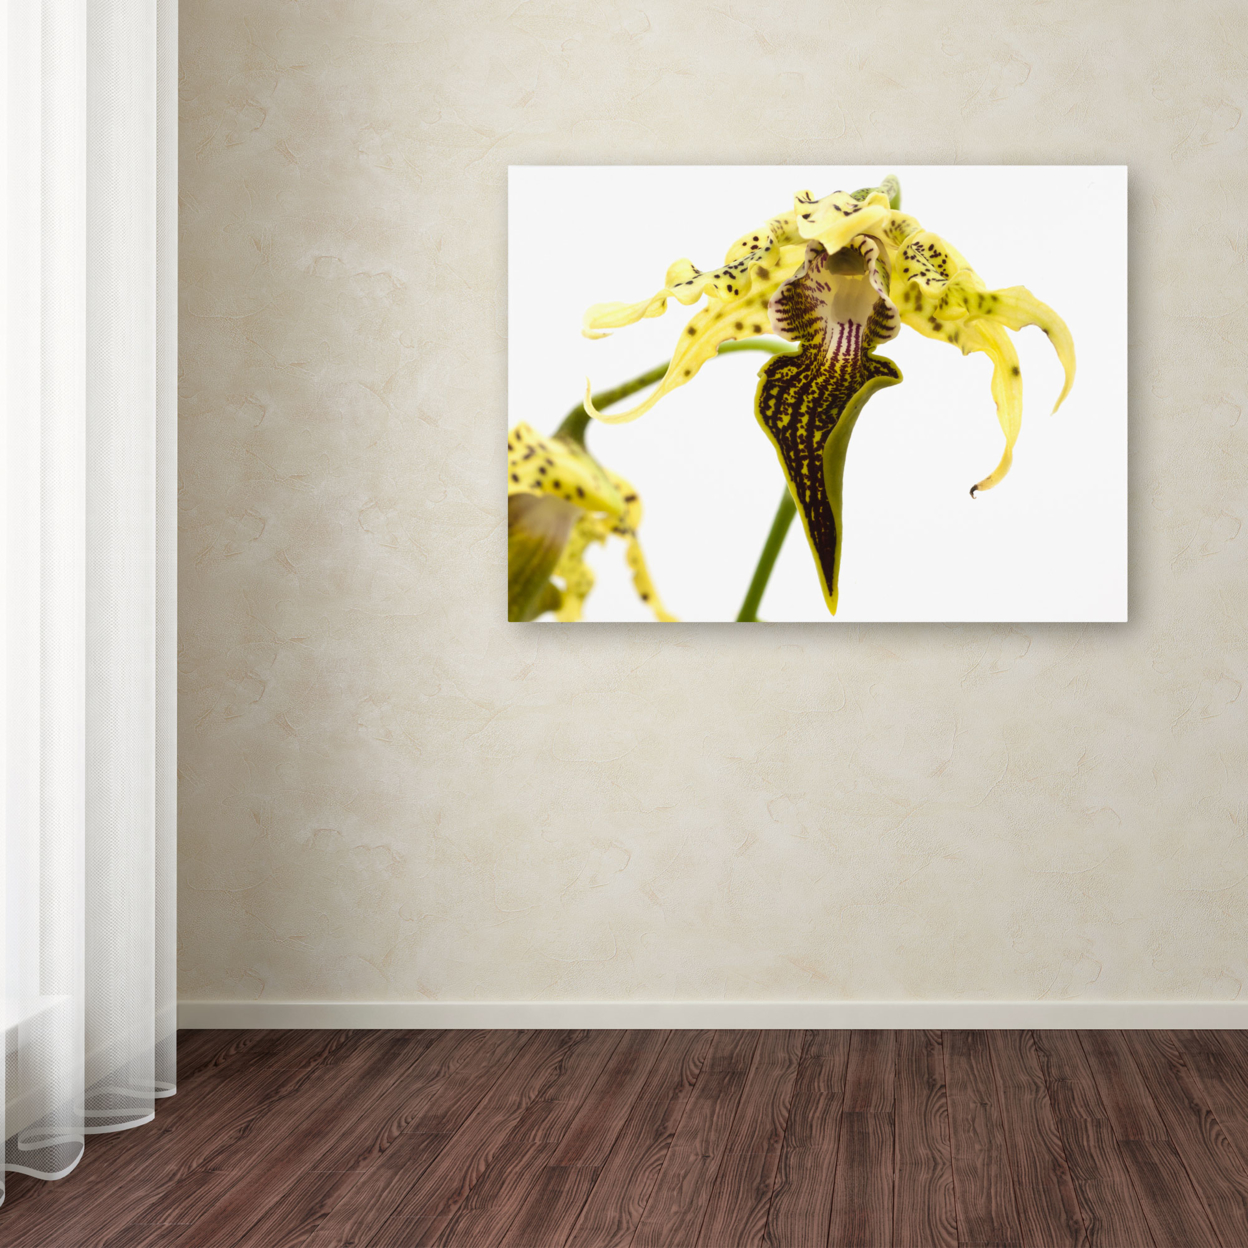 Kurt Shaffer 'Wild Looking Orchid' Canvas Wall Art 35 X 47 Inches